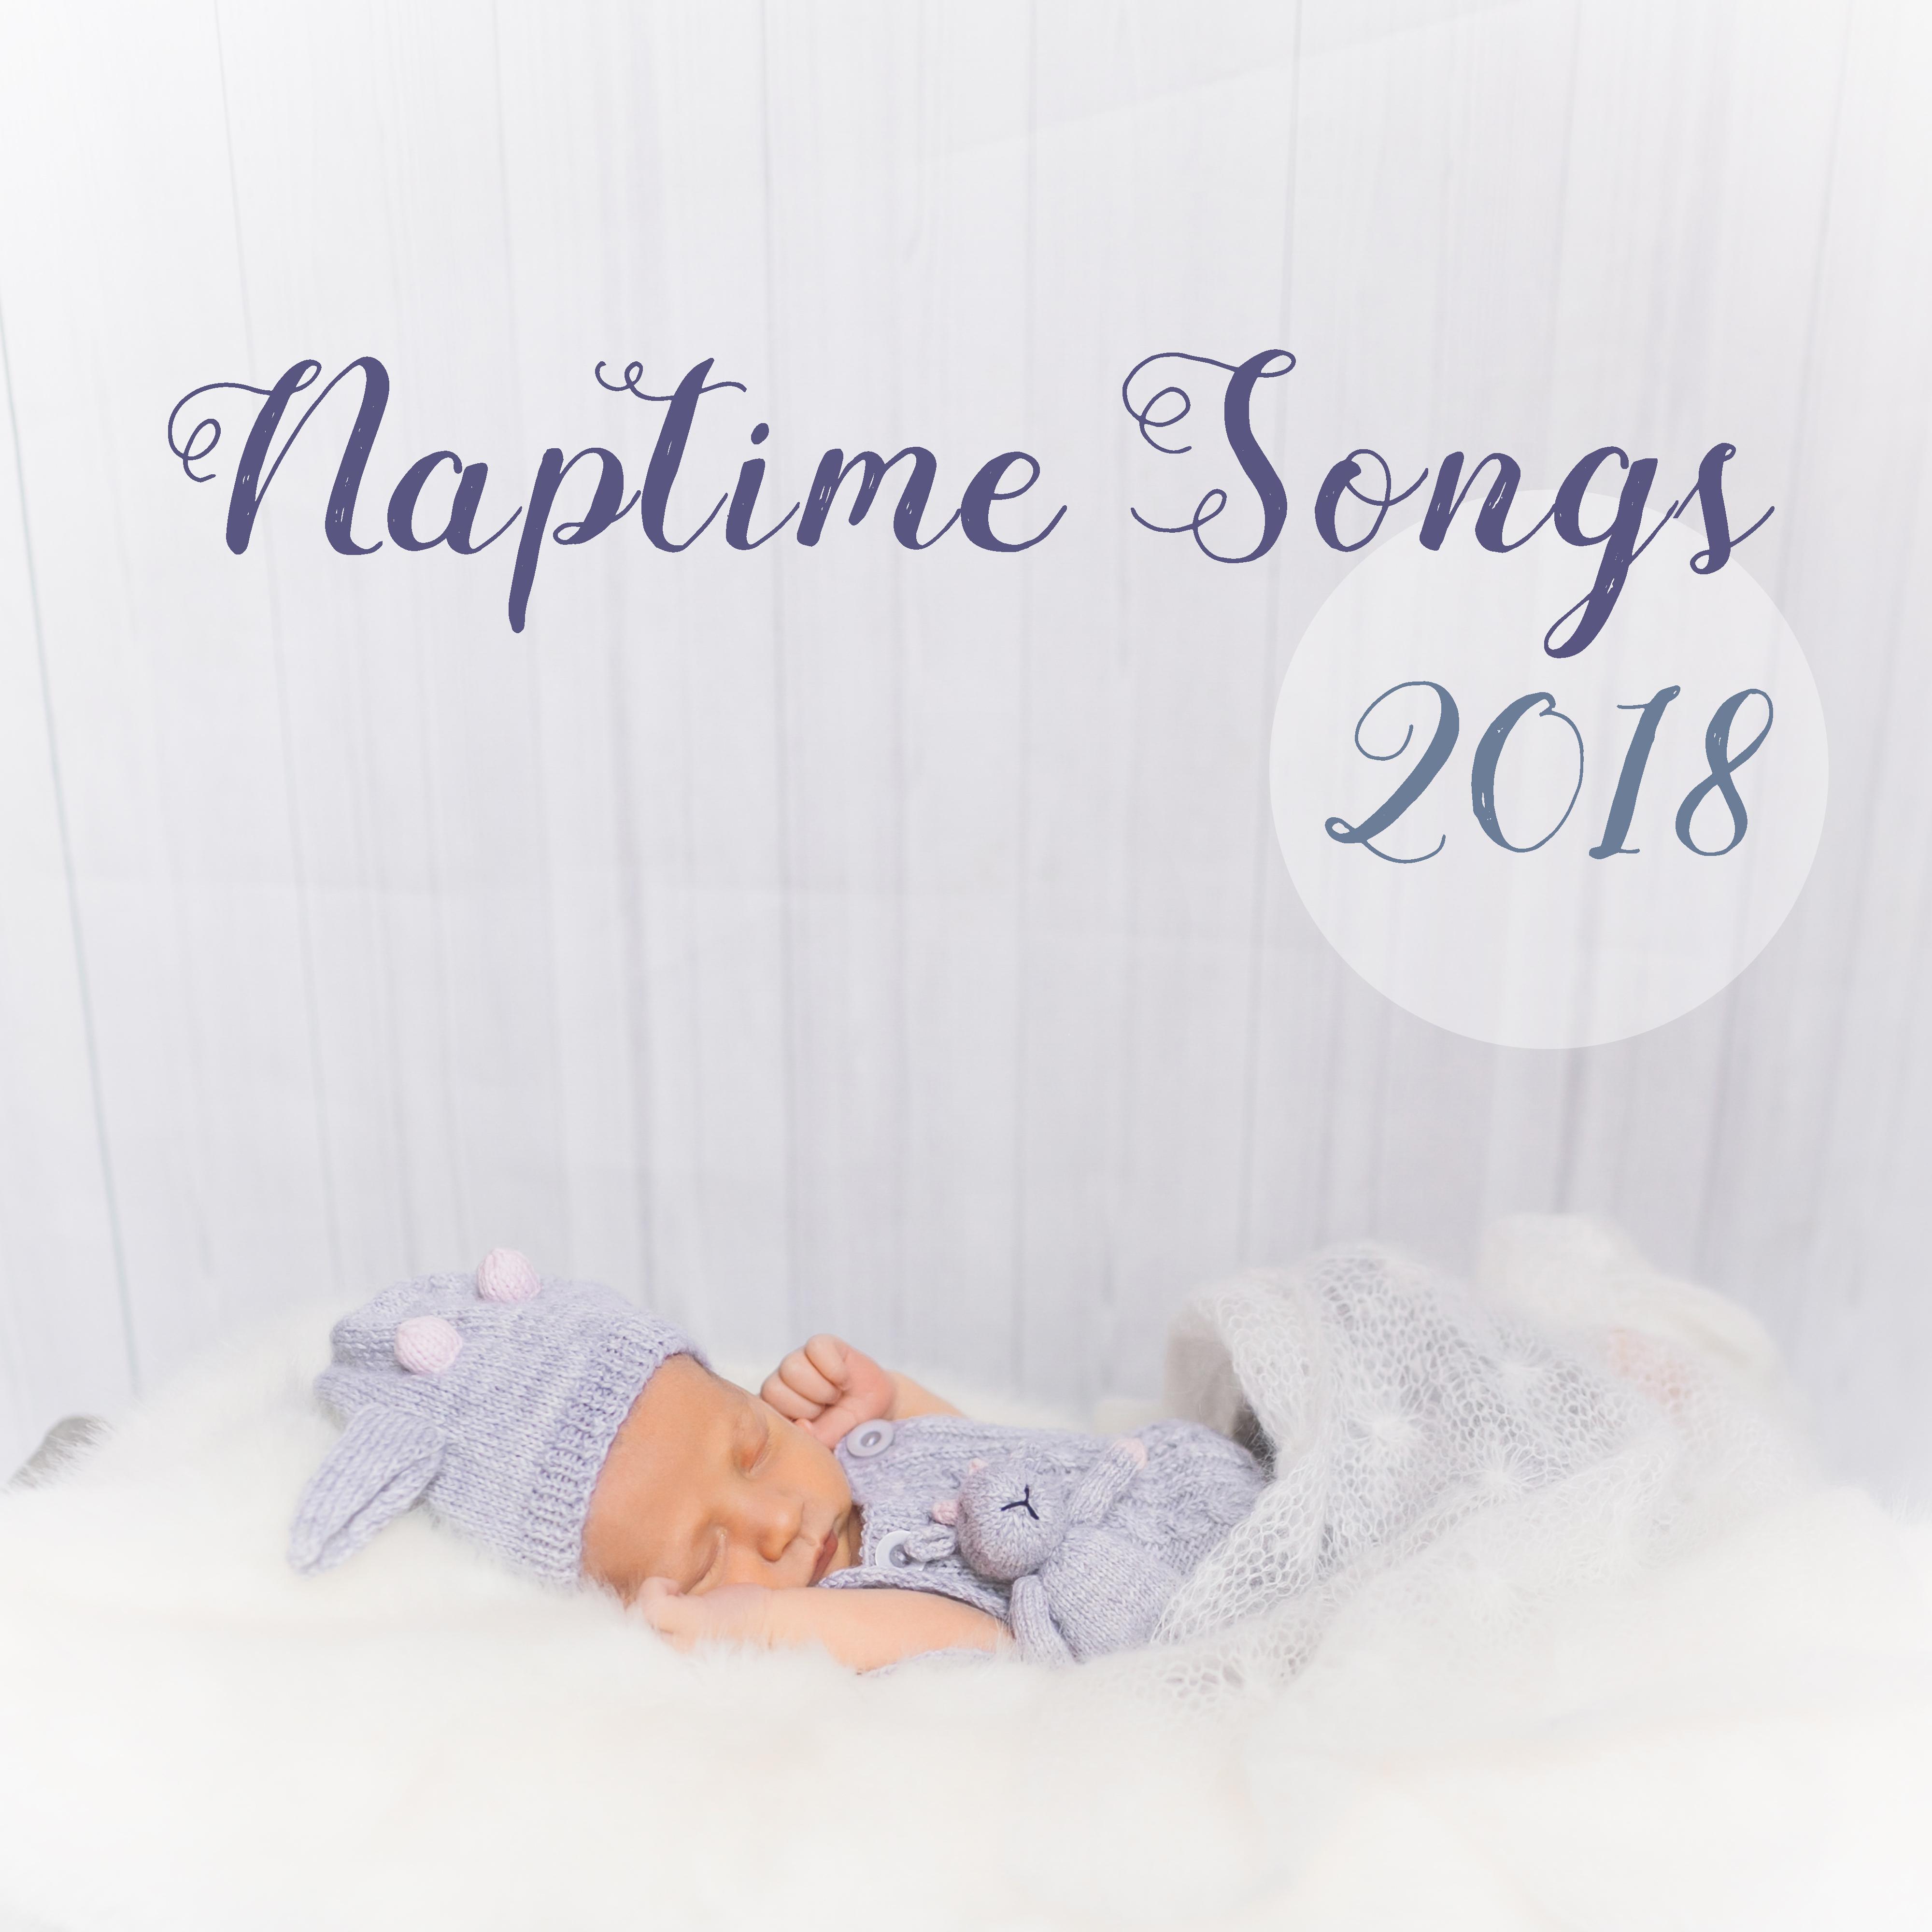 Naptime Songs 2018